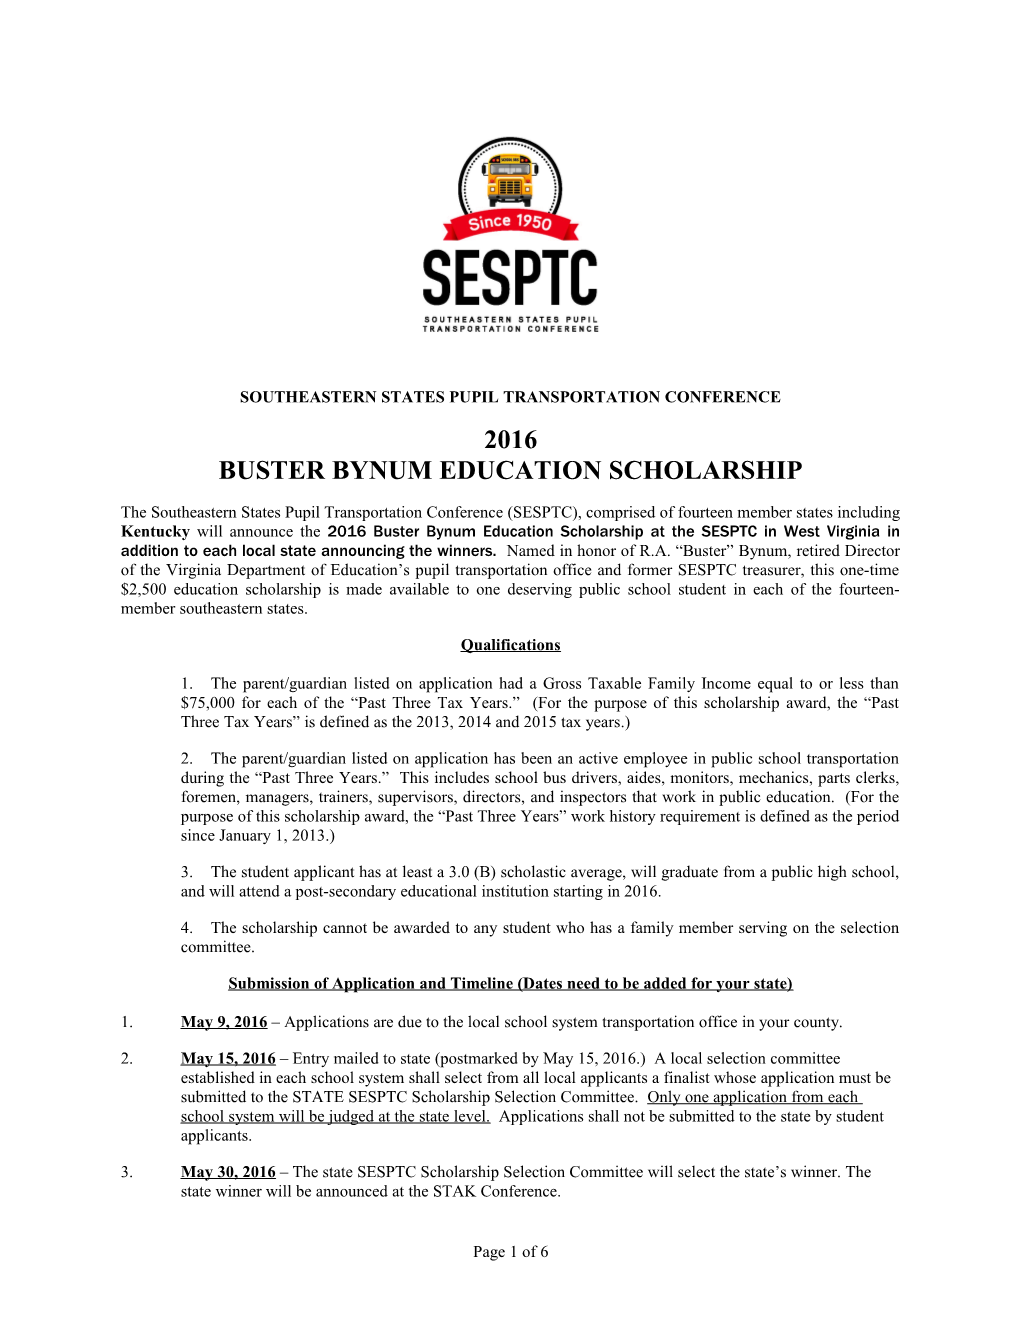 Buster Bynum Scholarship